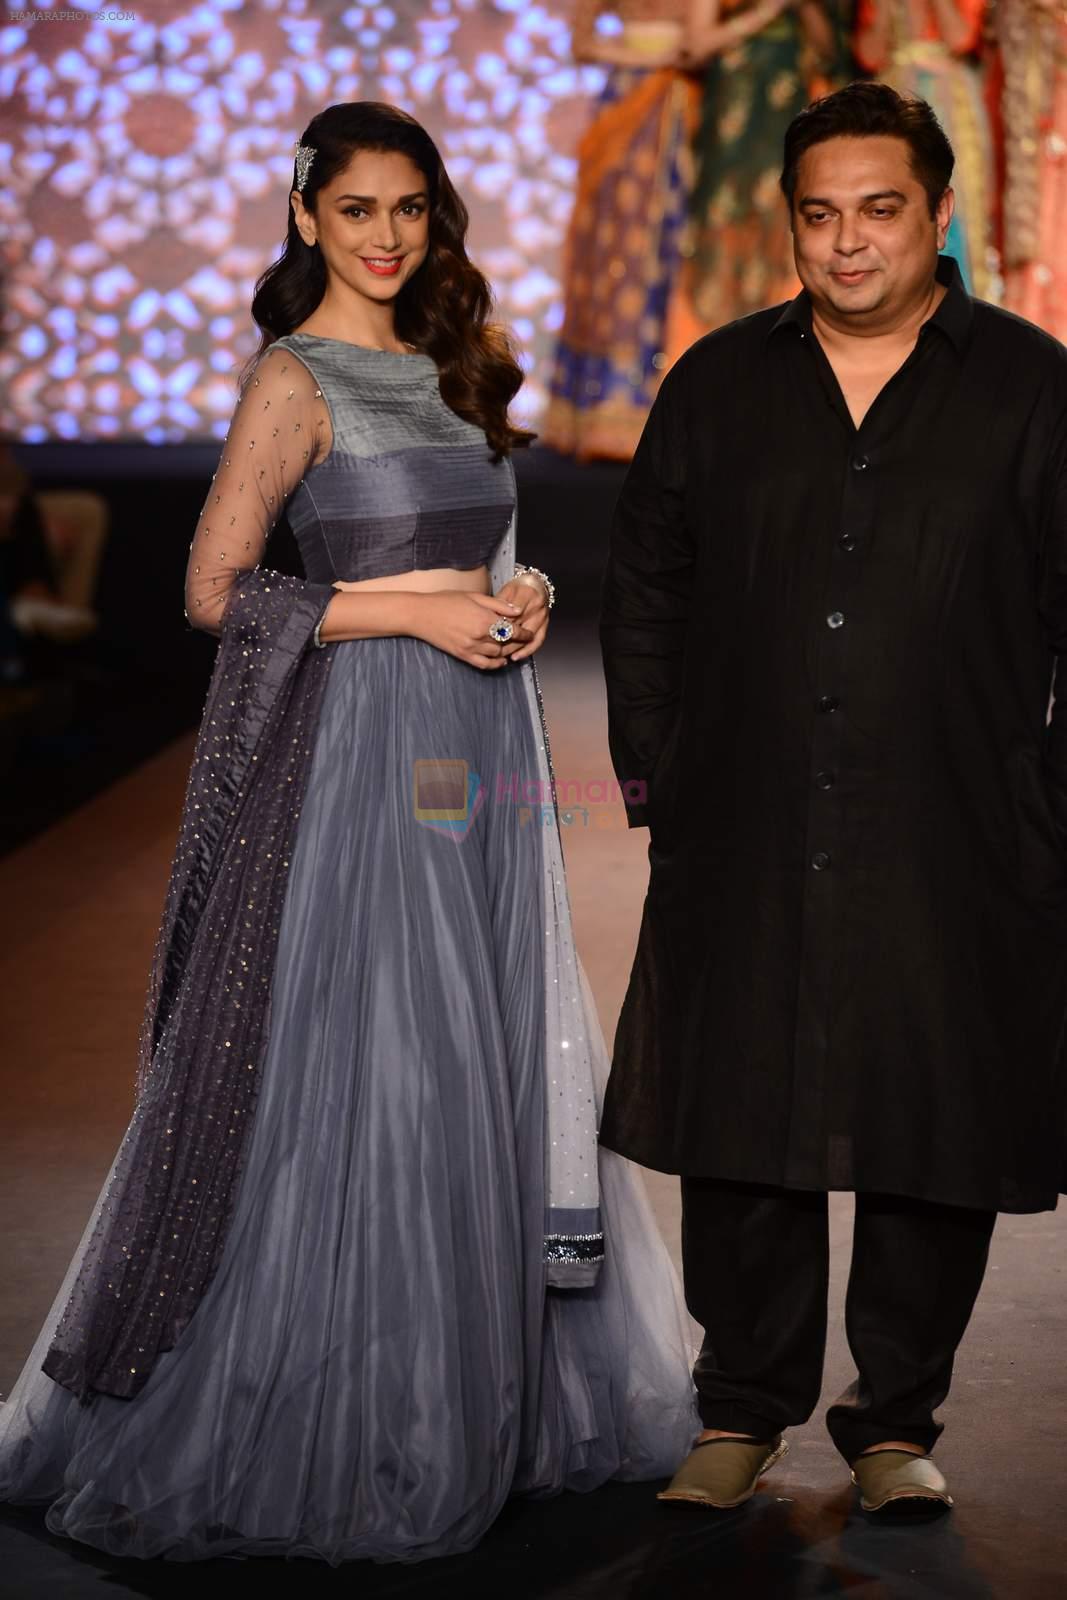 Aditi Rao Hydari walk for Debarun Show at India Couture Week 2015 on 1st Aug 2015